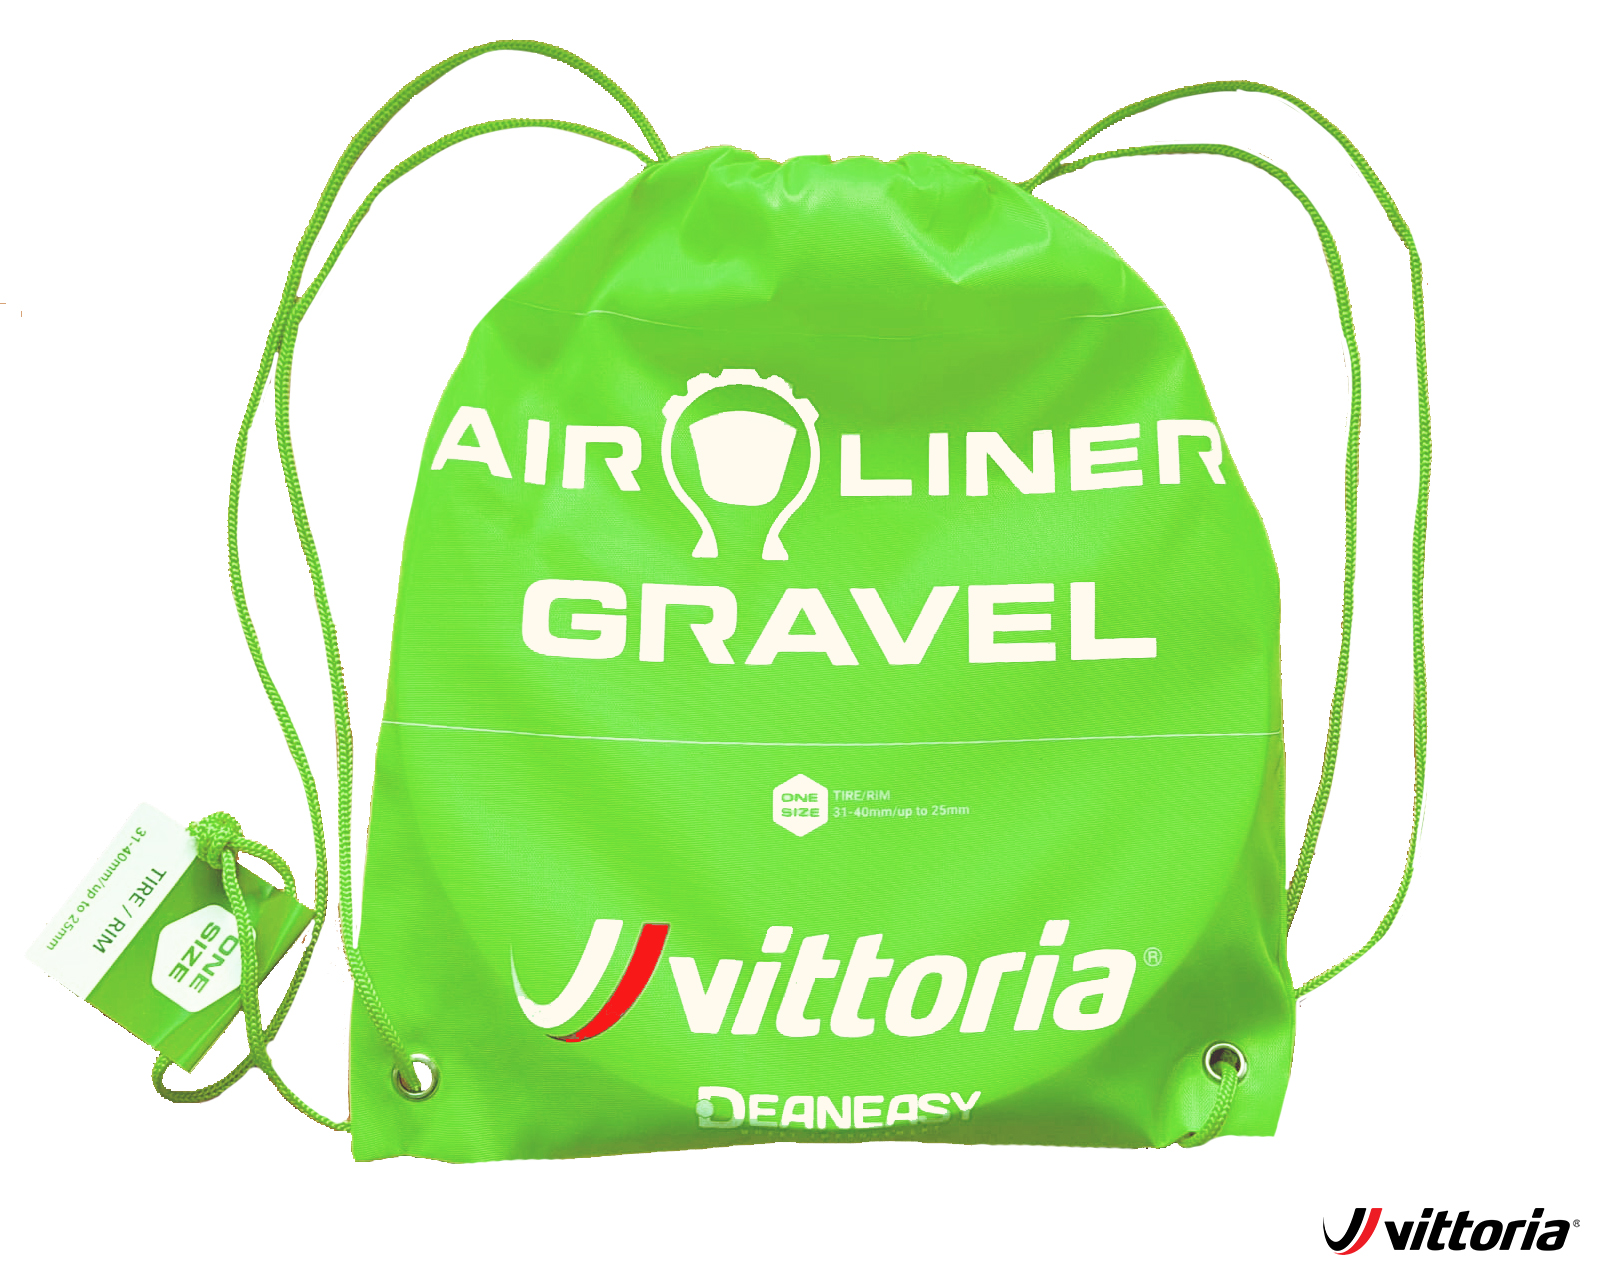 Air-Liner GRAVEL 2